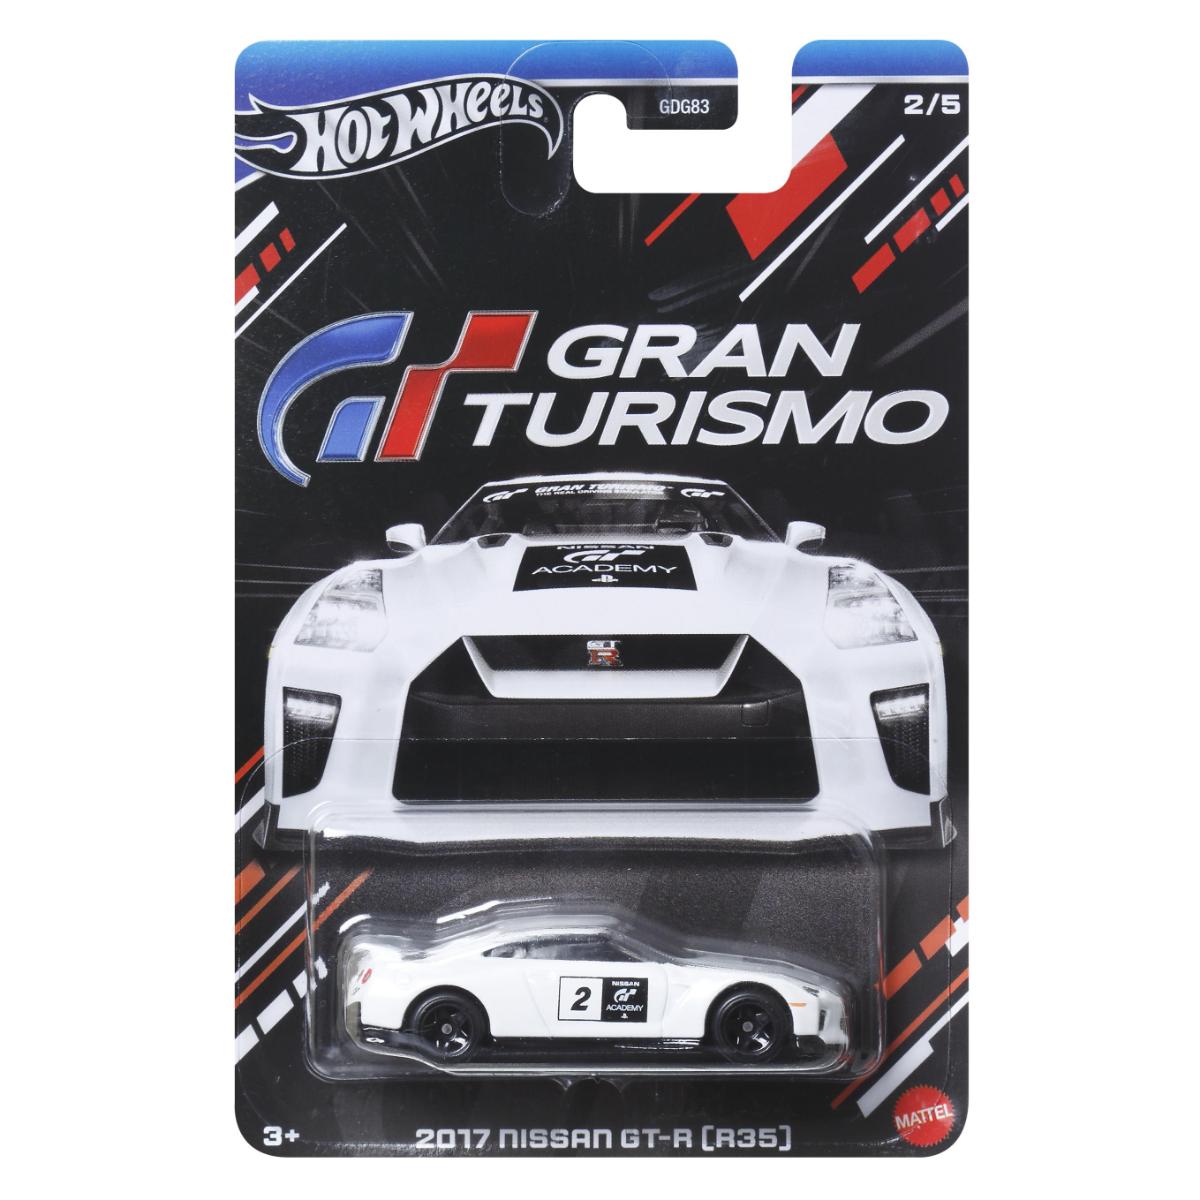 Masinuta metalica, Hot Wheels, Gran Turismo, 2017 Nissan GT-R (R35) HRV64